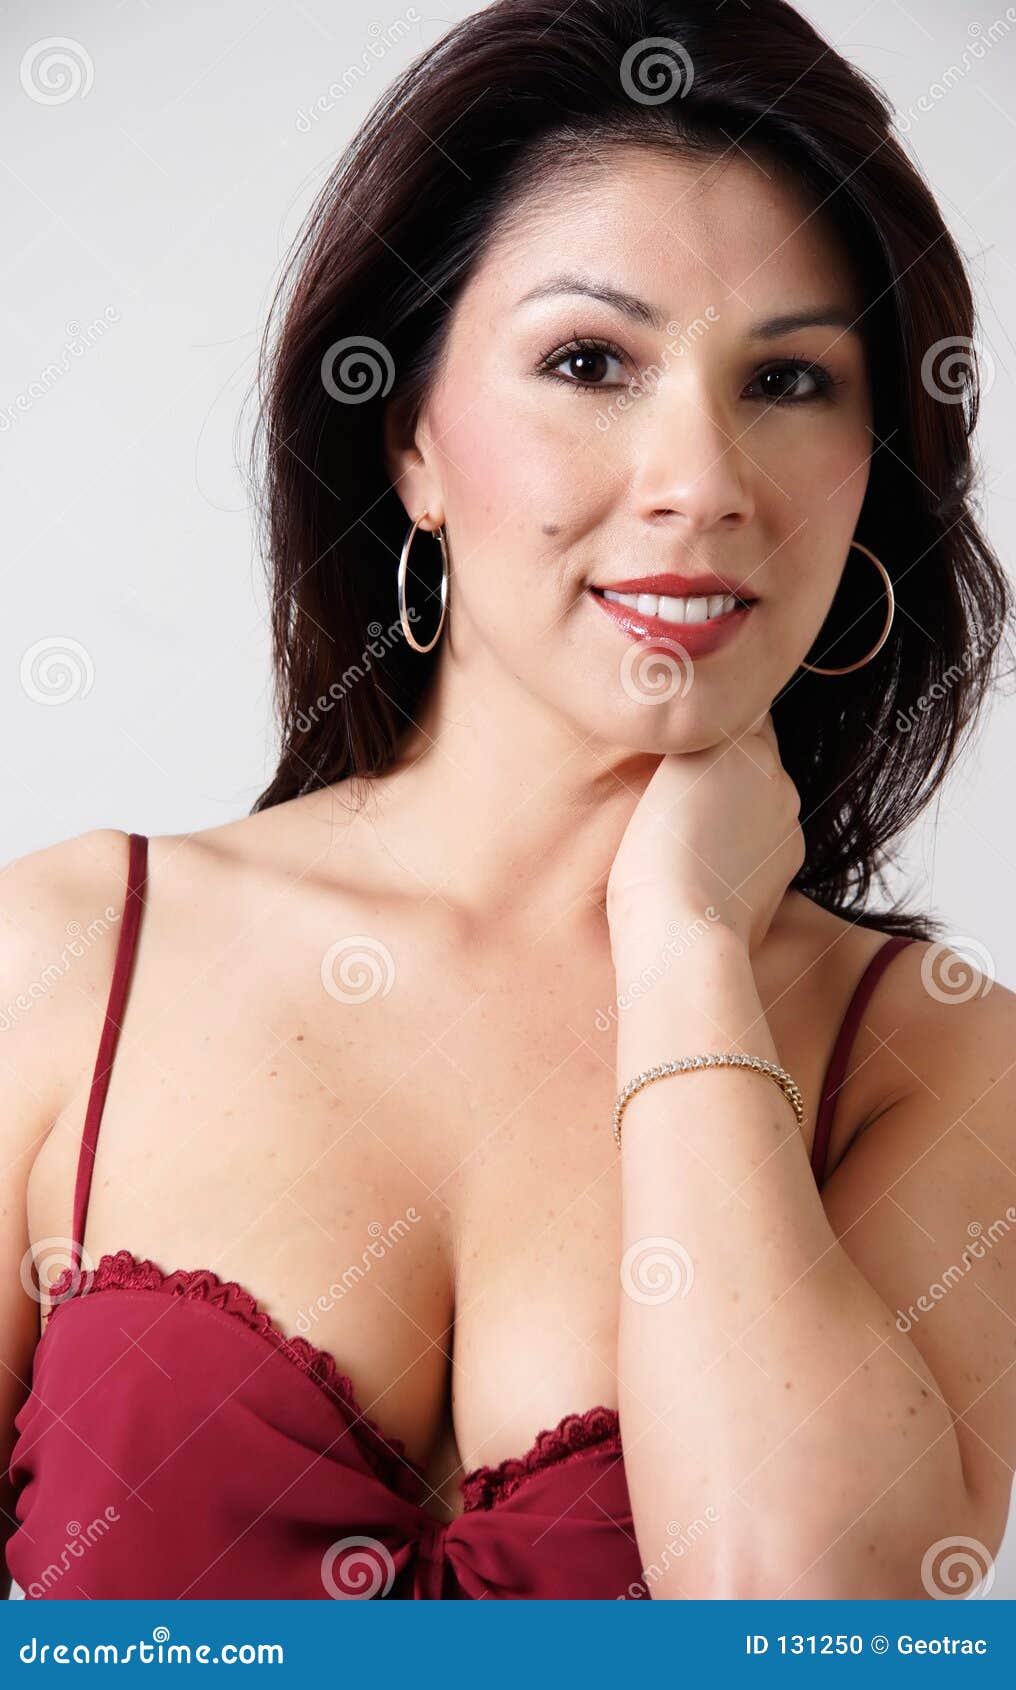 christel thirion add photo sexy mature latina women